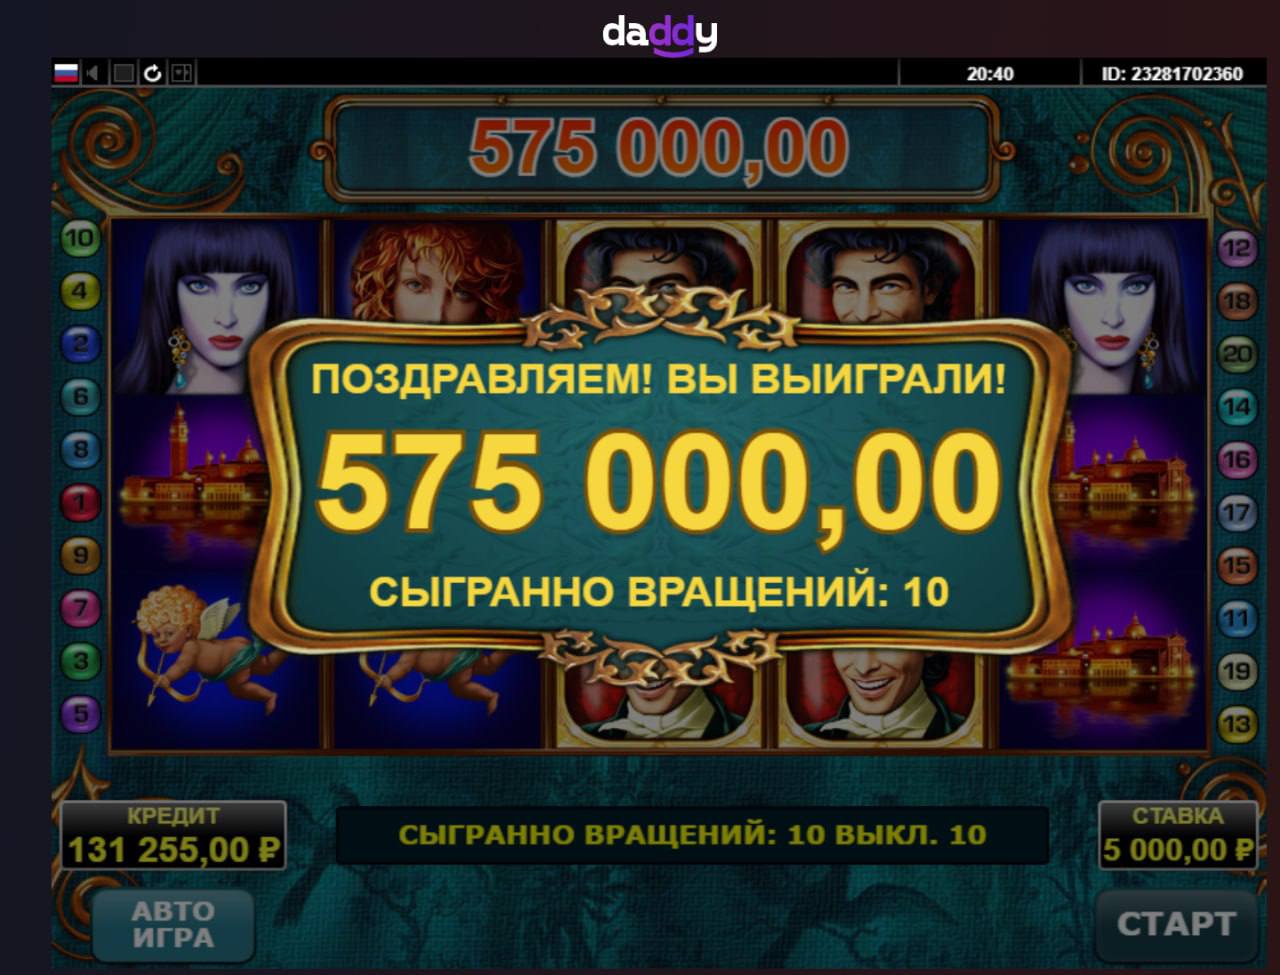 Daddy casino вход daddy casinos pp ru. Daddy Casino 982.